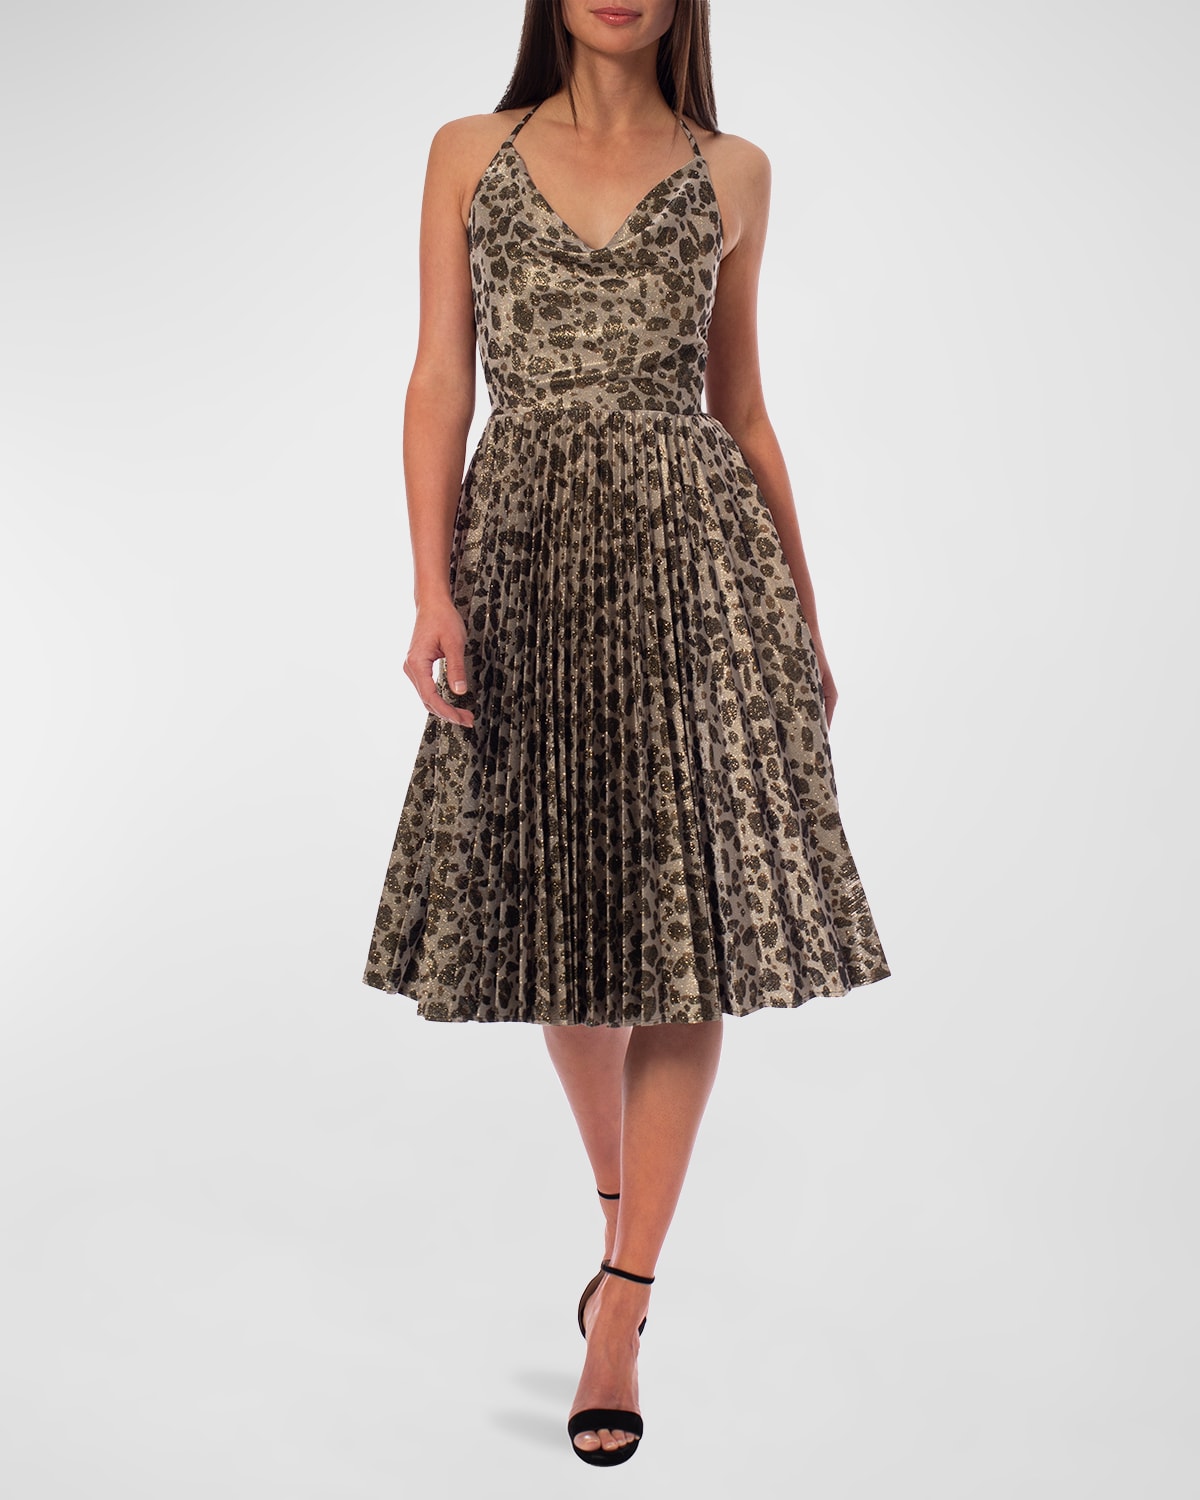 HELSI Coleen Pleated Cheetah-Print Cowl-Neck Dress